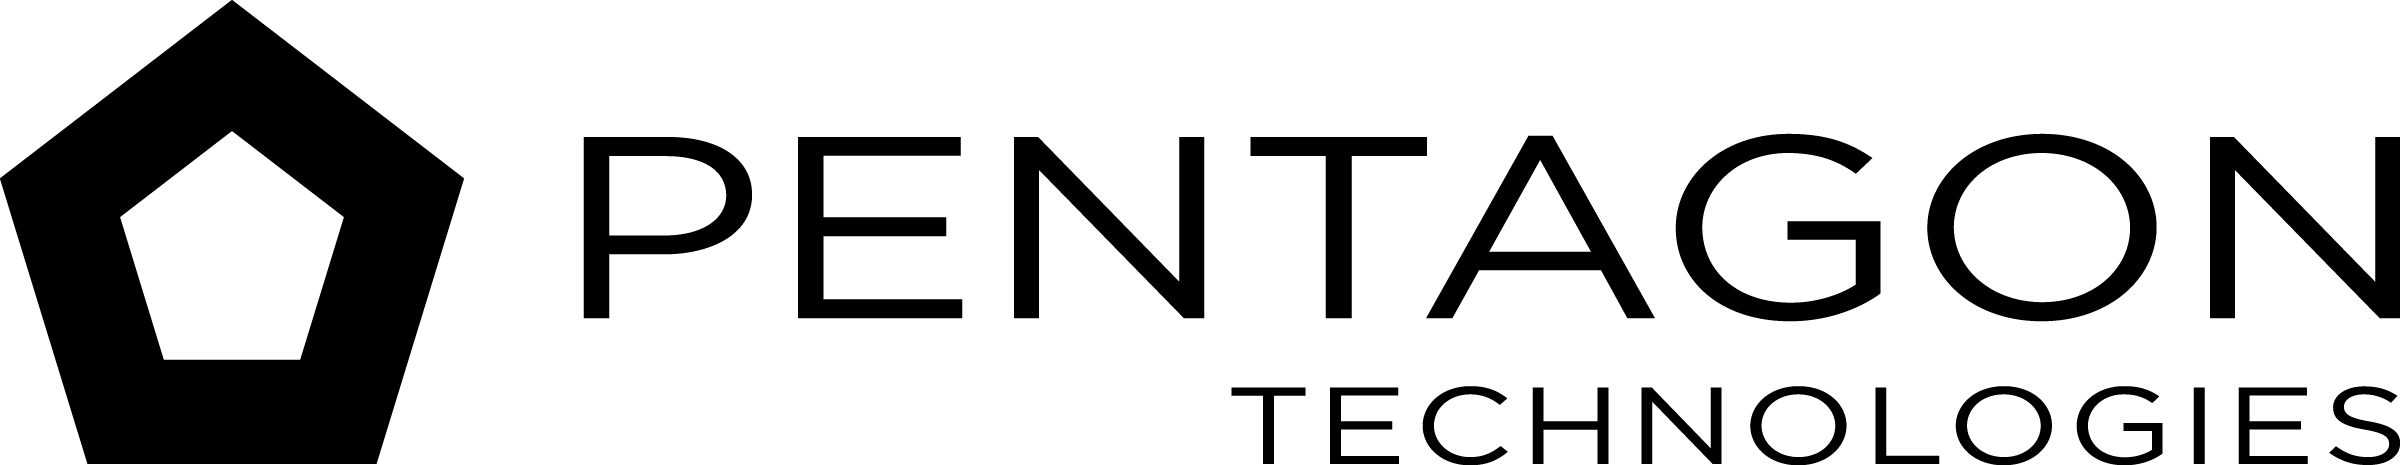 PentagonTechnologies_Logo_2012Update_Black